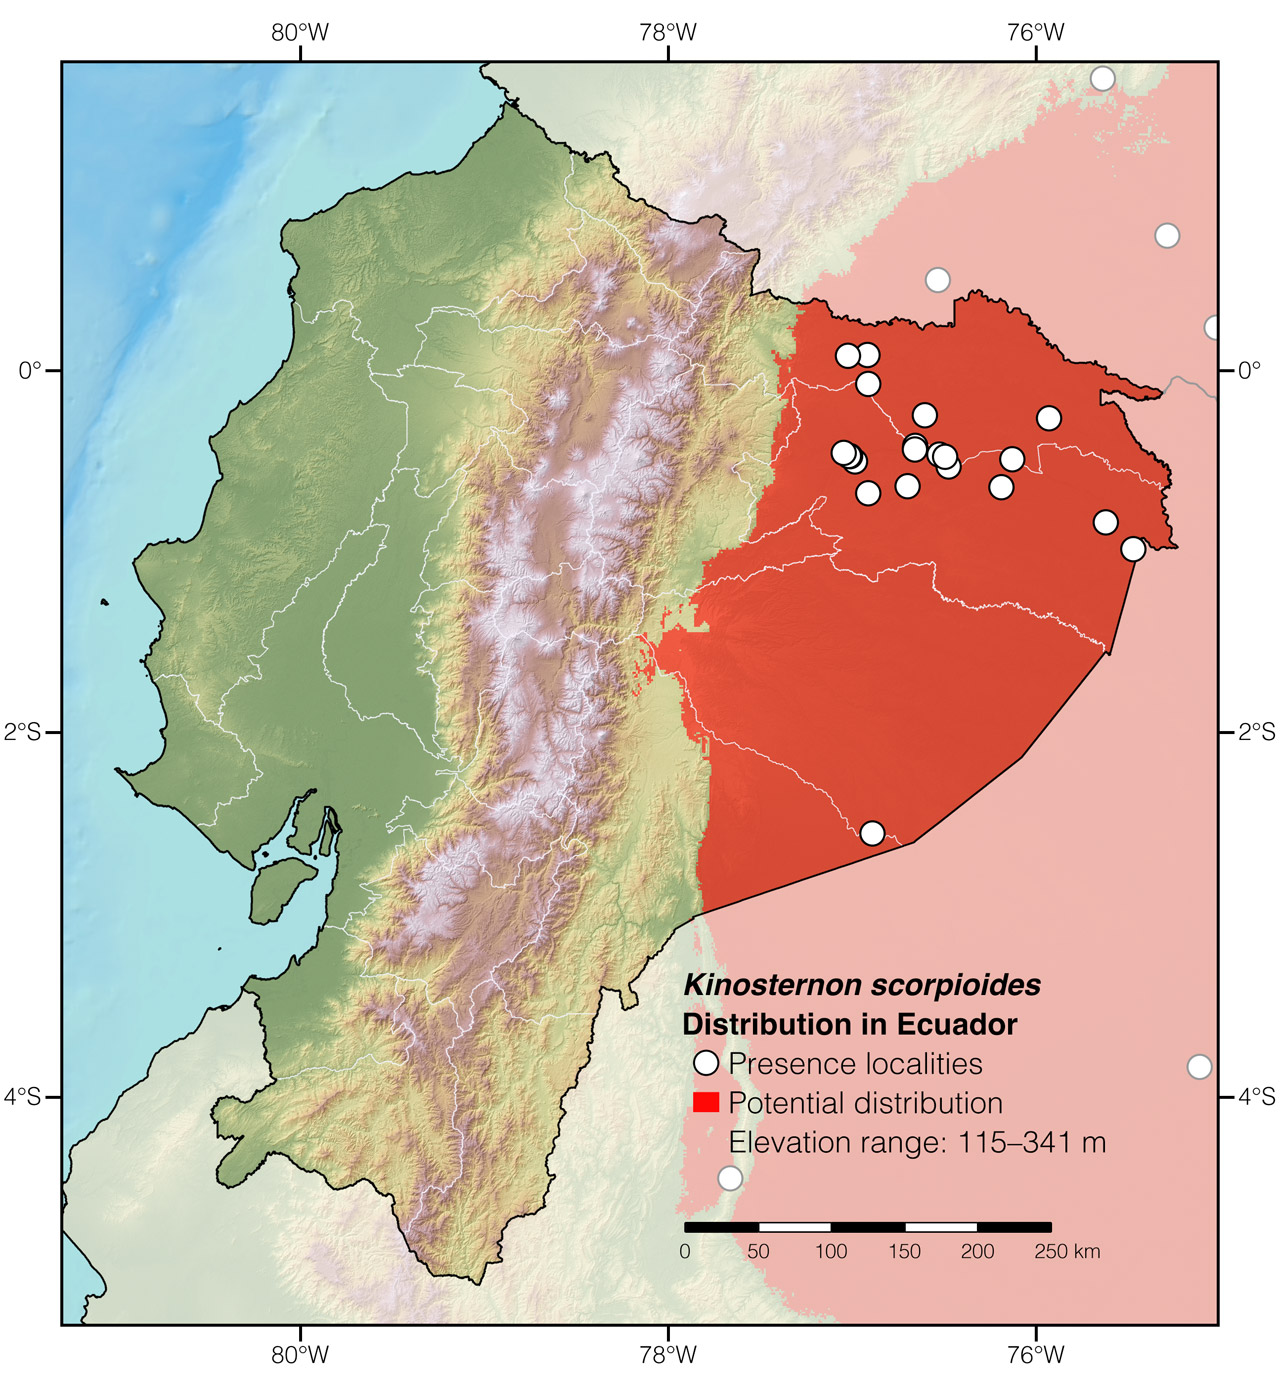 Distribution of Kinosternon scorpioides in Ecuador